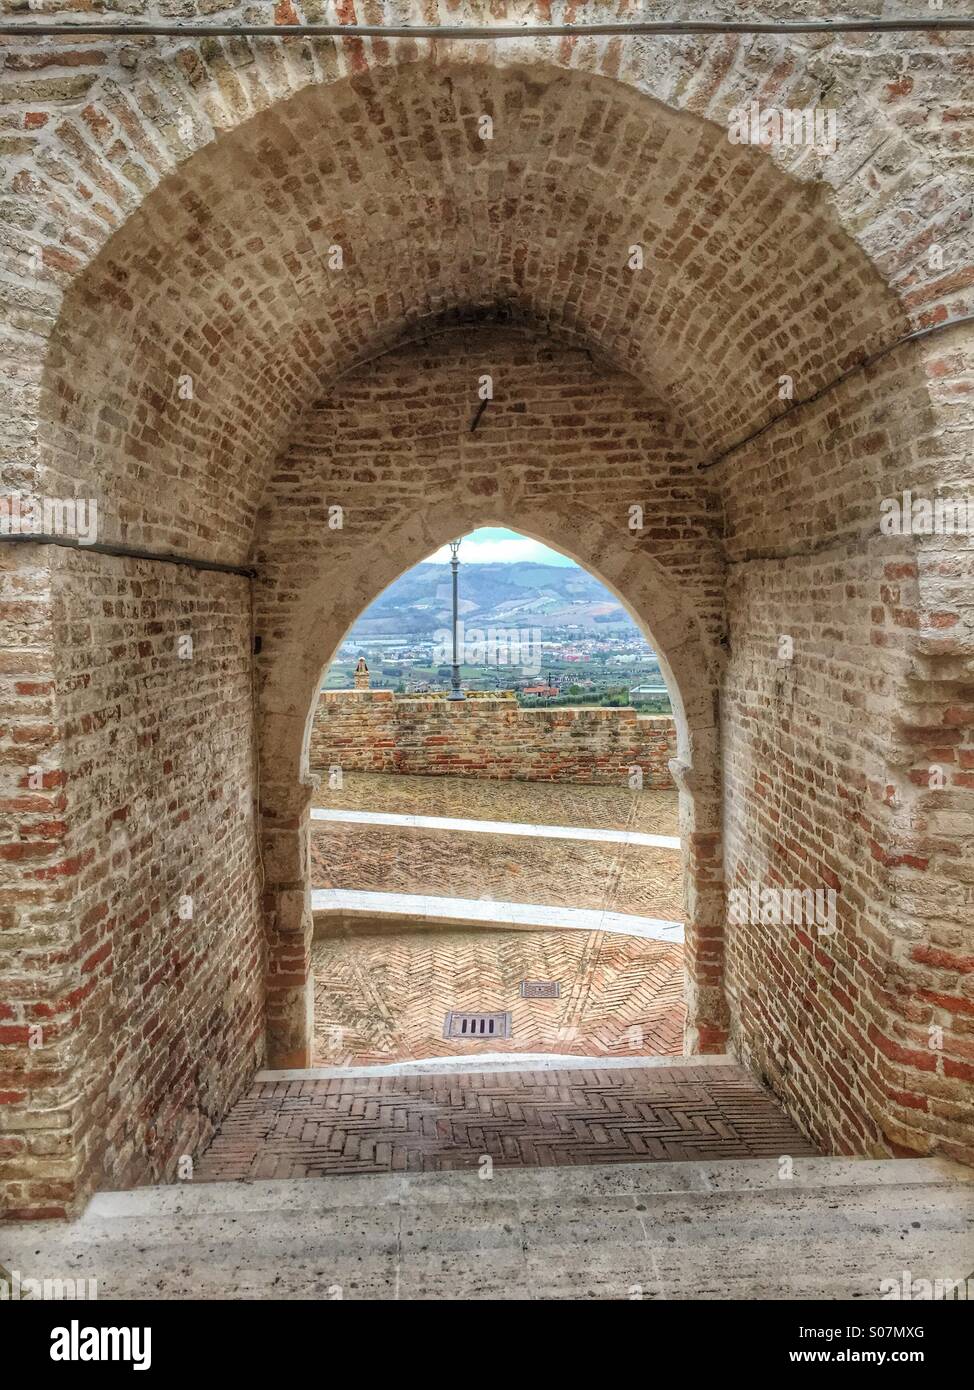 View through a city gate, Spinetoli,Marche region,Italy Stock Photo